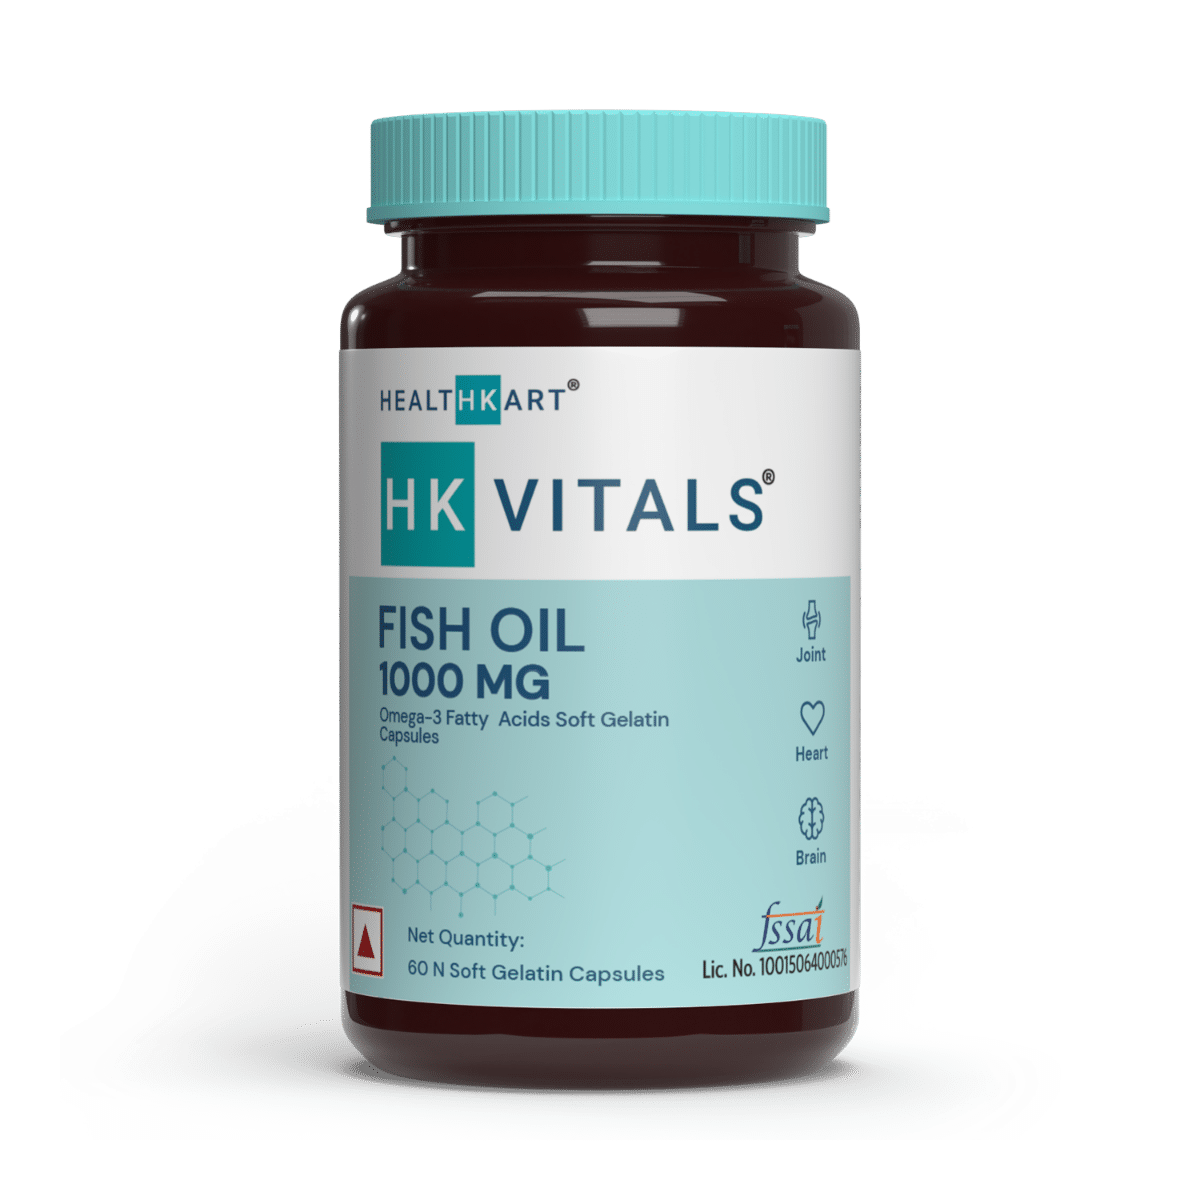 Buy HealthKart HK Vitals Fish Oil 1000 mg, 60 Soft Gelatin Capsules Online